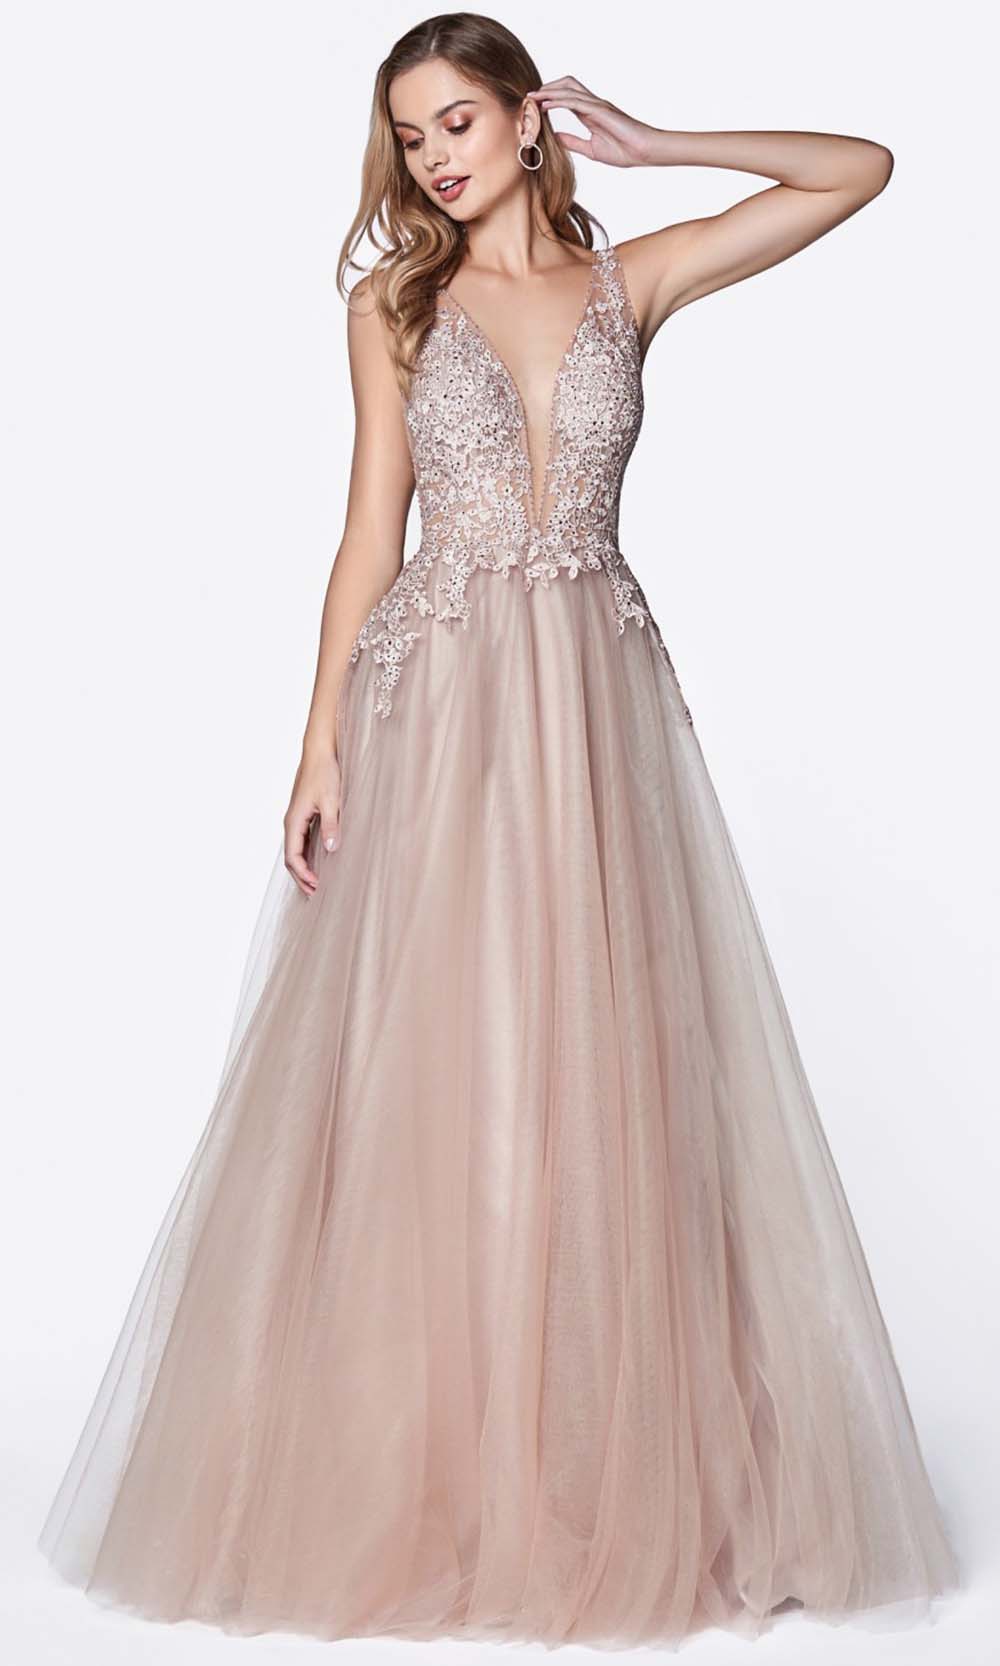 Cinderella Divine - CJ511 Jeweled Lace Tulle A-Line Dress In Neutral